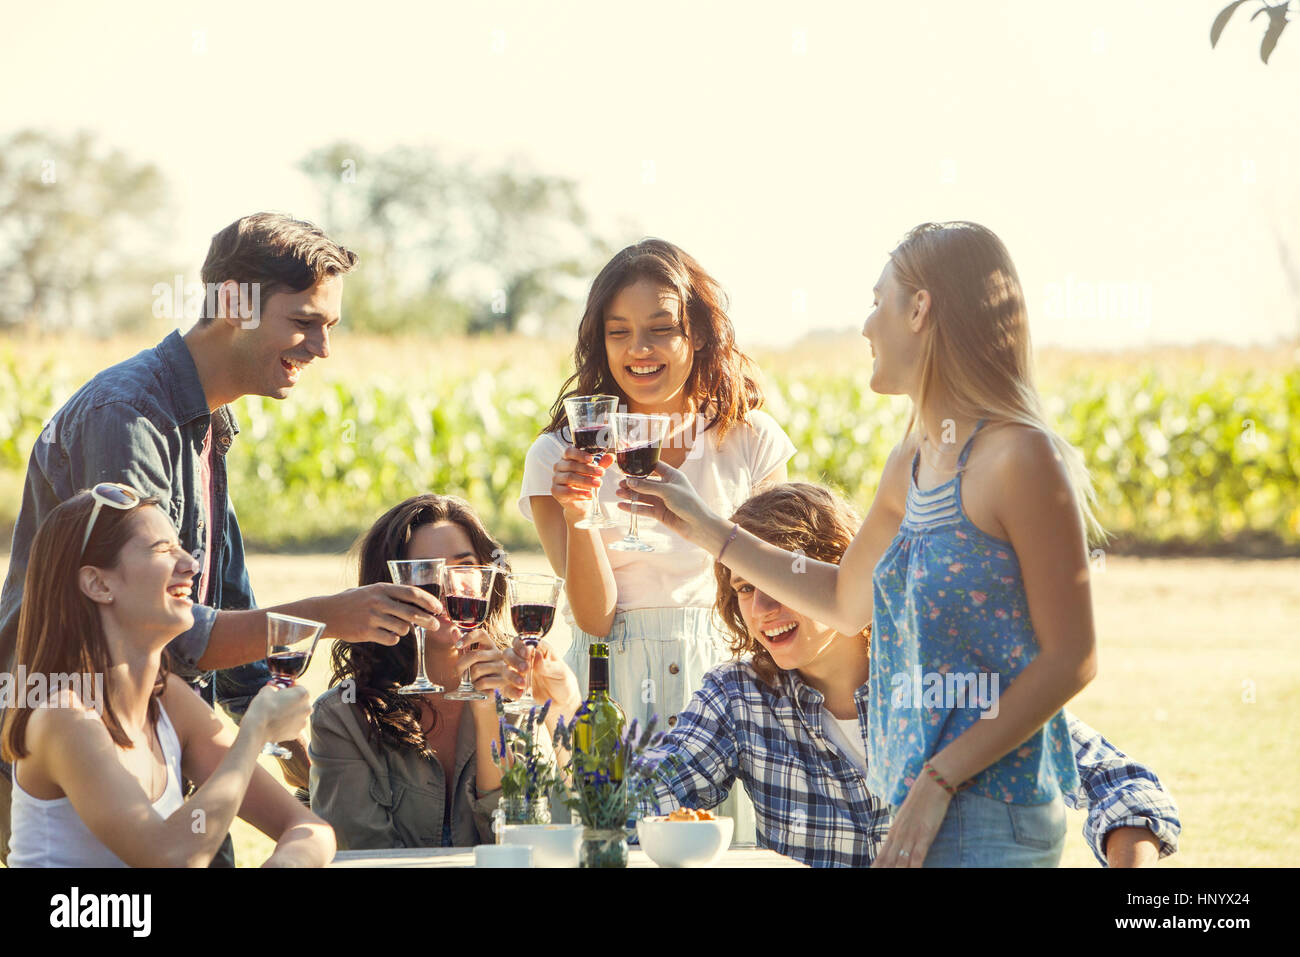 Friends enjoying glass of wine at vineyard Stock Photo